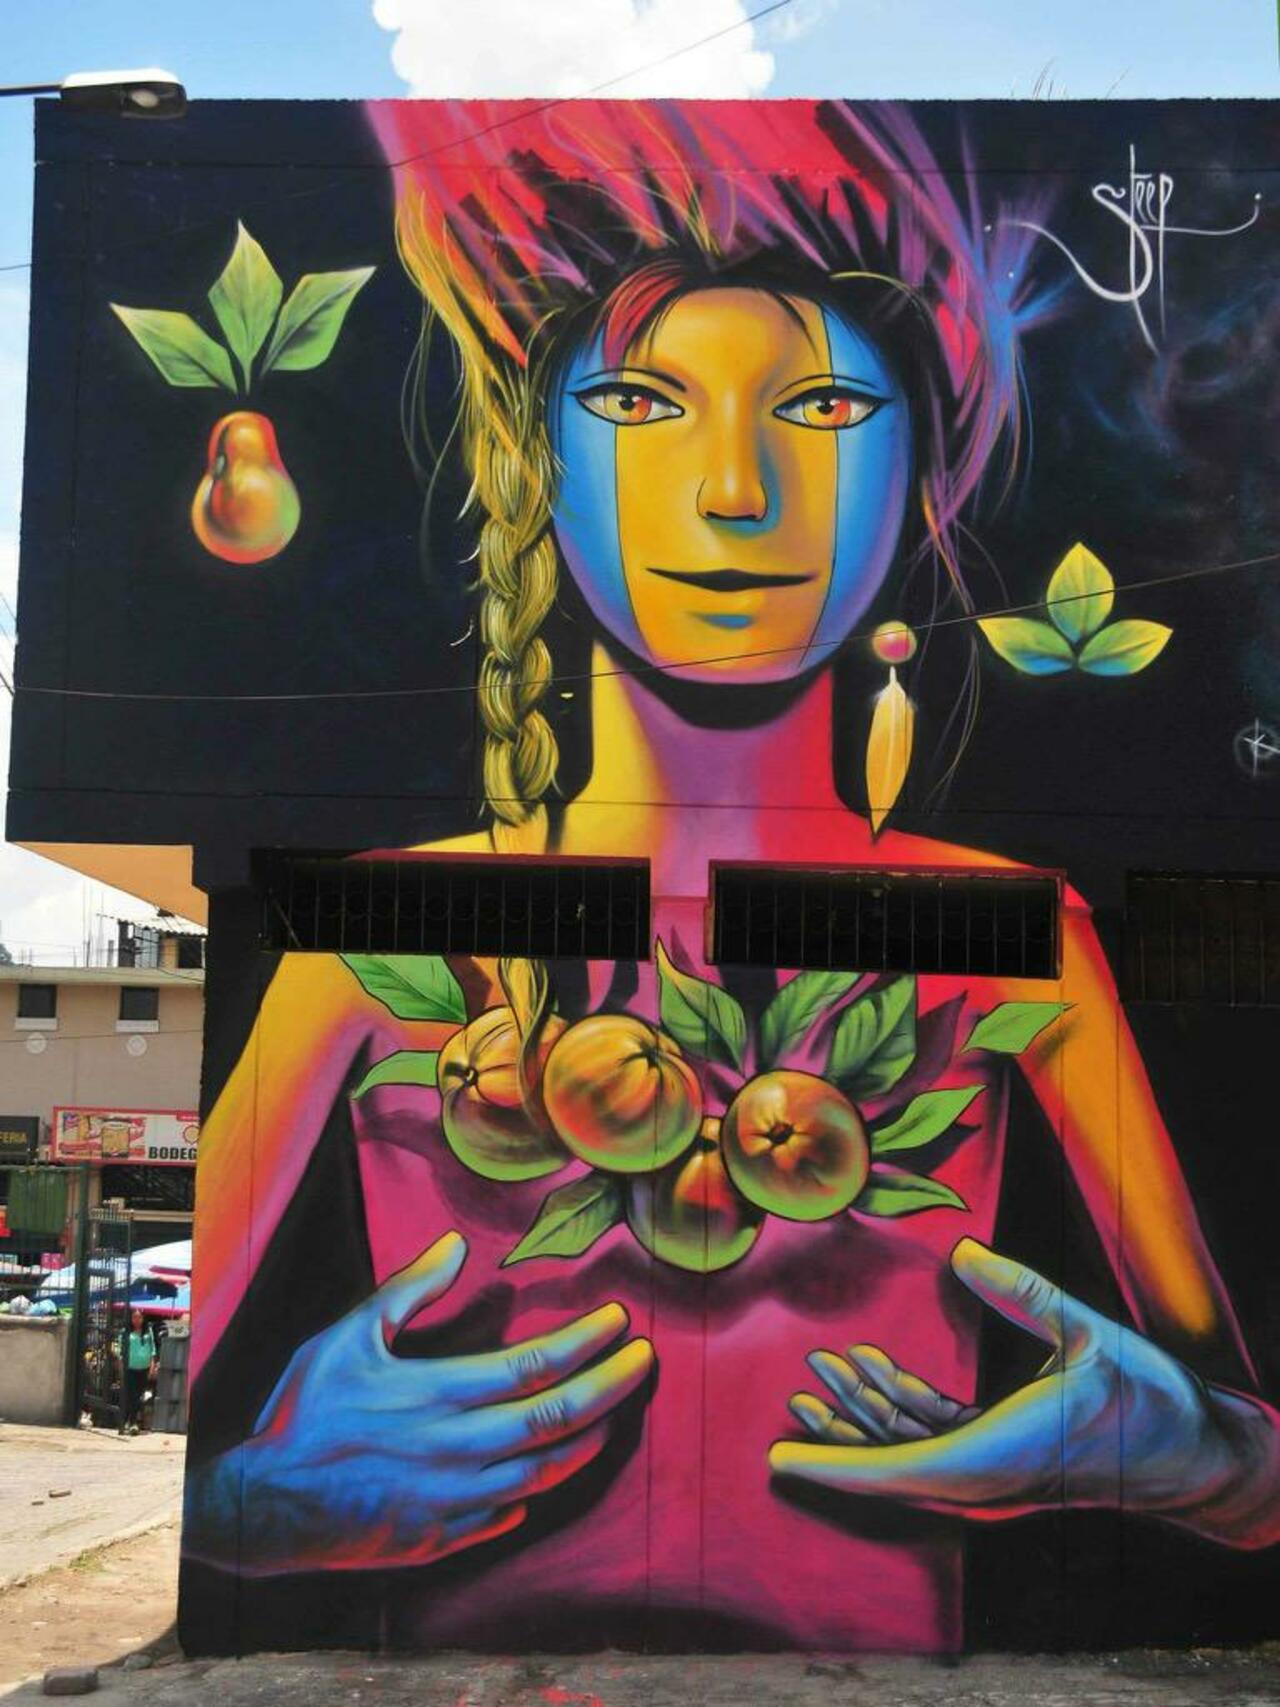 Street Art by Steep #art #graffiti #mural #streetart http://t.co/dKGIfl0HiR http://twitter.com/GoogleStreetArt/status/652717552435638272/photo/1/large?utm_source=fb&utm_medium=fb&utm_campaign=charlesjackso14&utm_content=652720469402103808 … … http://twitter.com/GoogleStreetArt/status/652717552435638272/photo/1/large?utm_source=fb&utm_medium=fb&utm_campaign=charlesjackso14&utm_content=652728475678326784